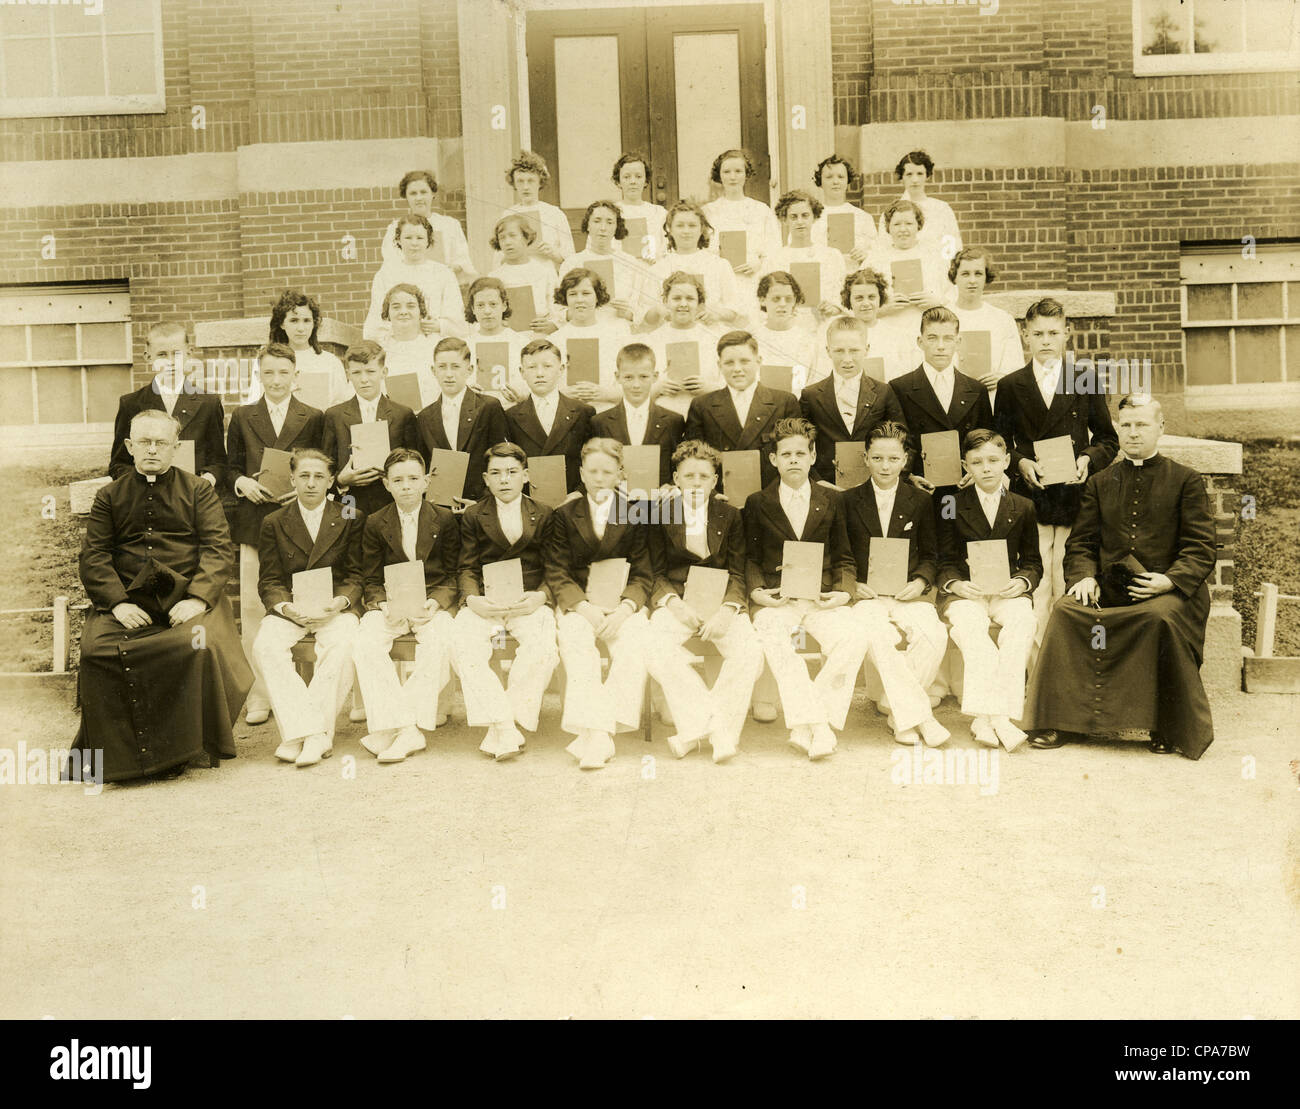 Circa 1910s photograph of students at a Catholic school in Marlborough, Massachusetts. Stock Photo